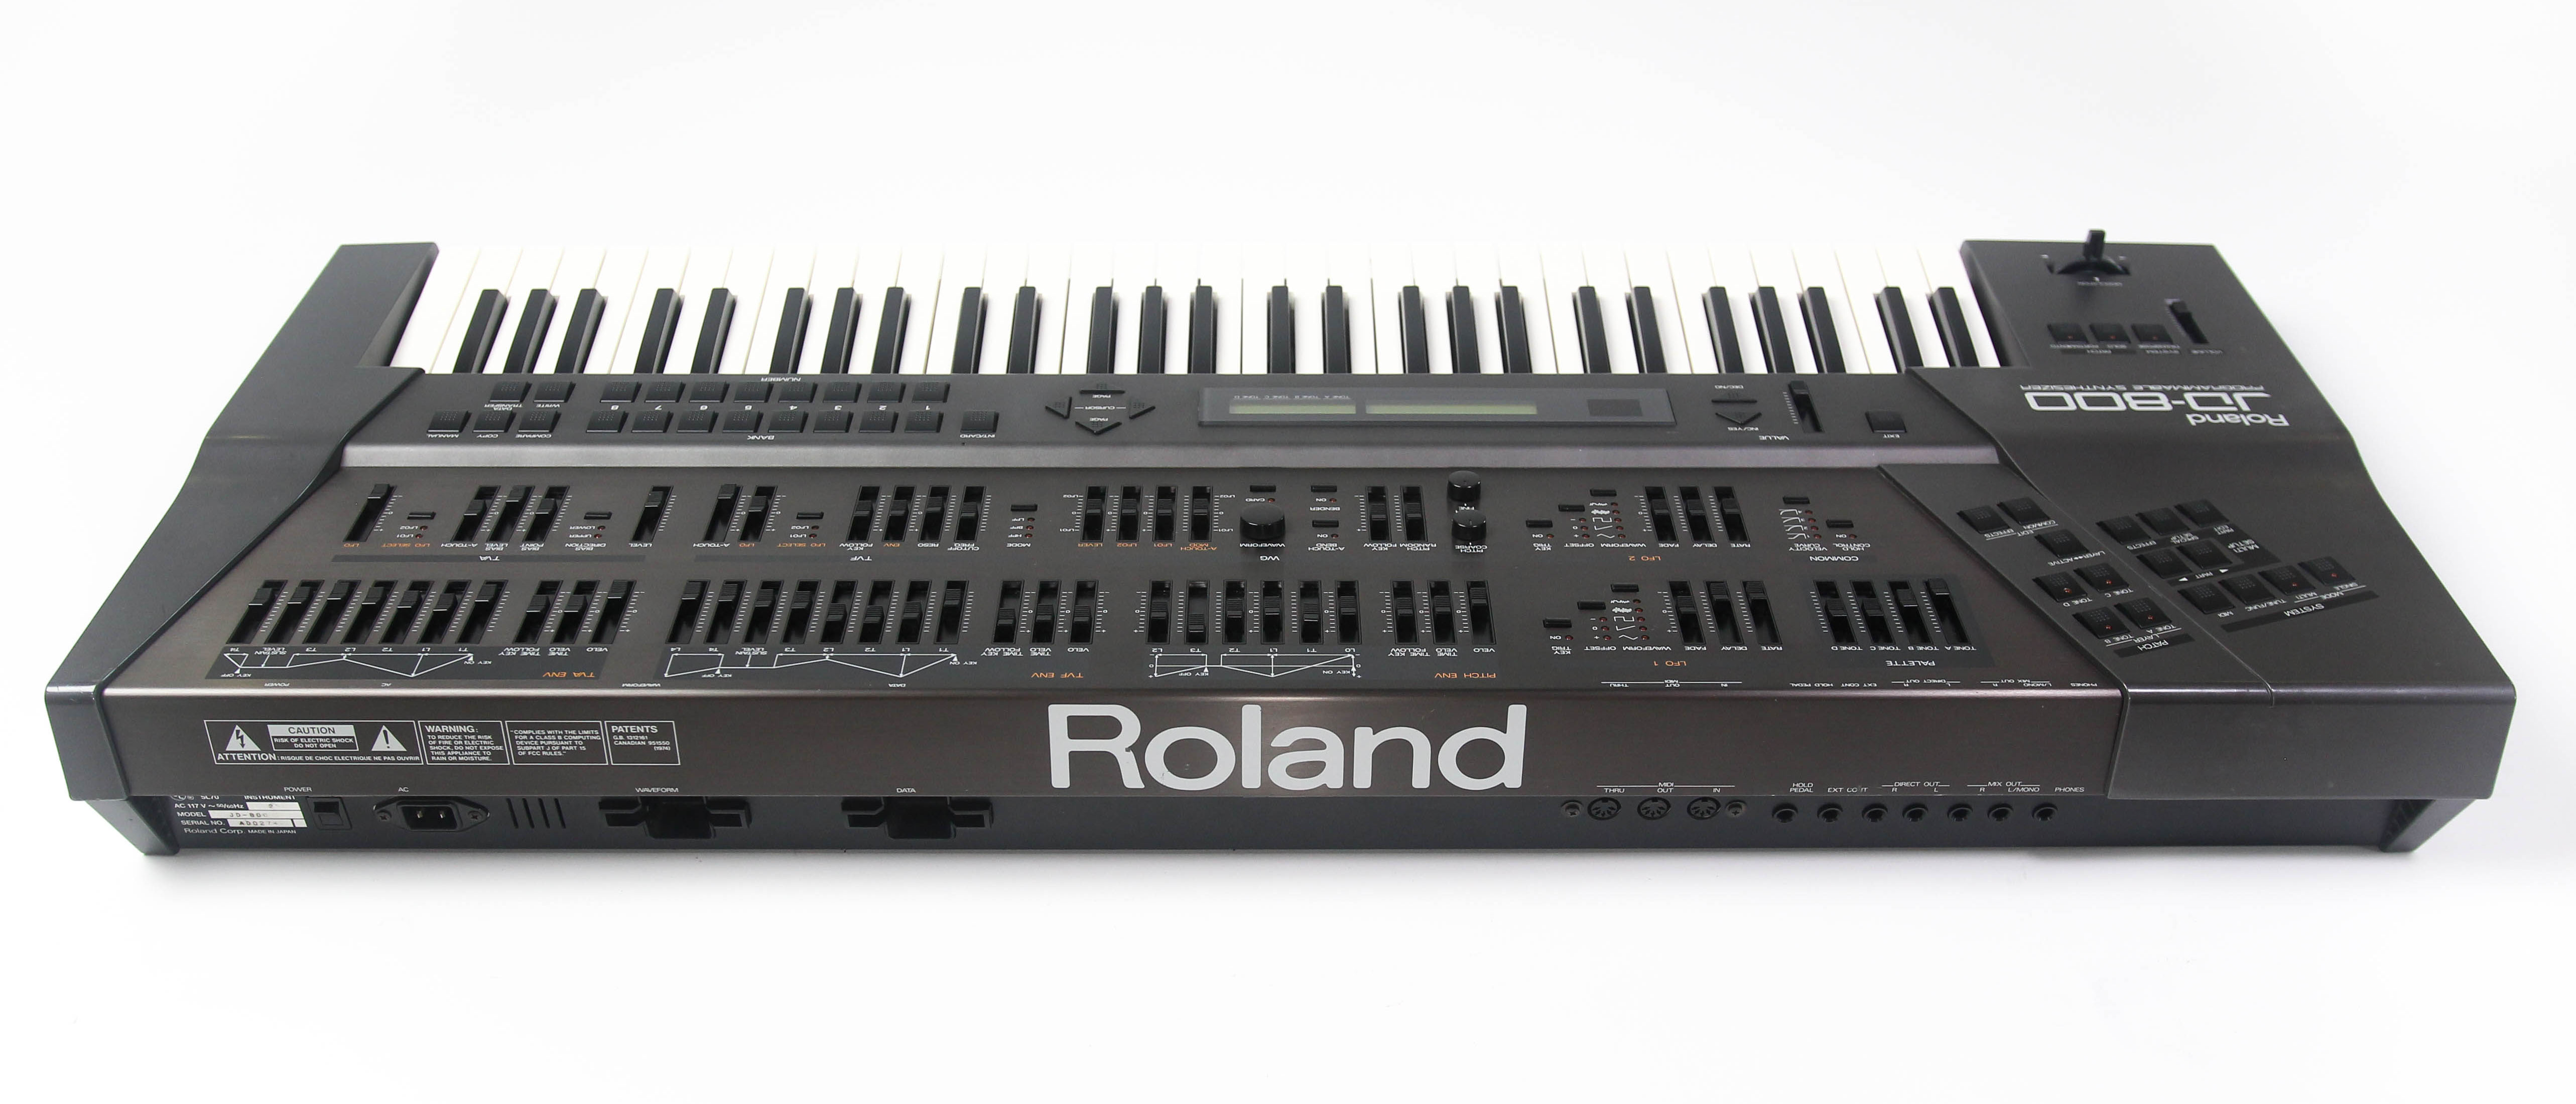 Roland JD-800 photo gallery - Syntaur